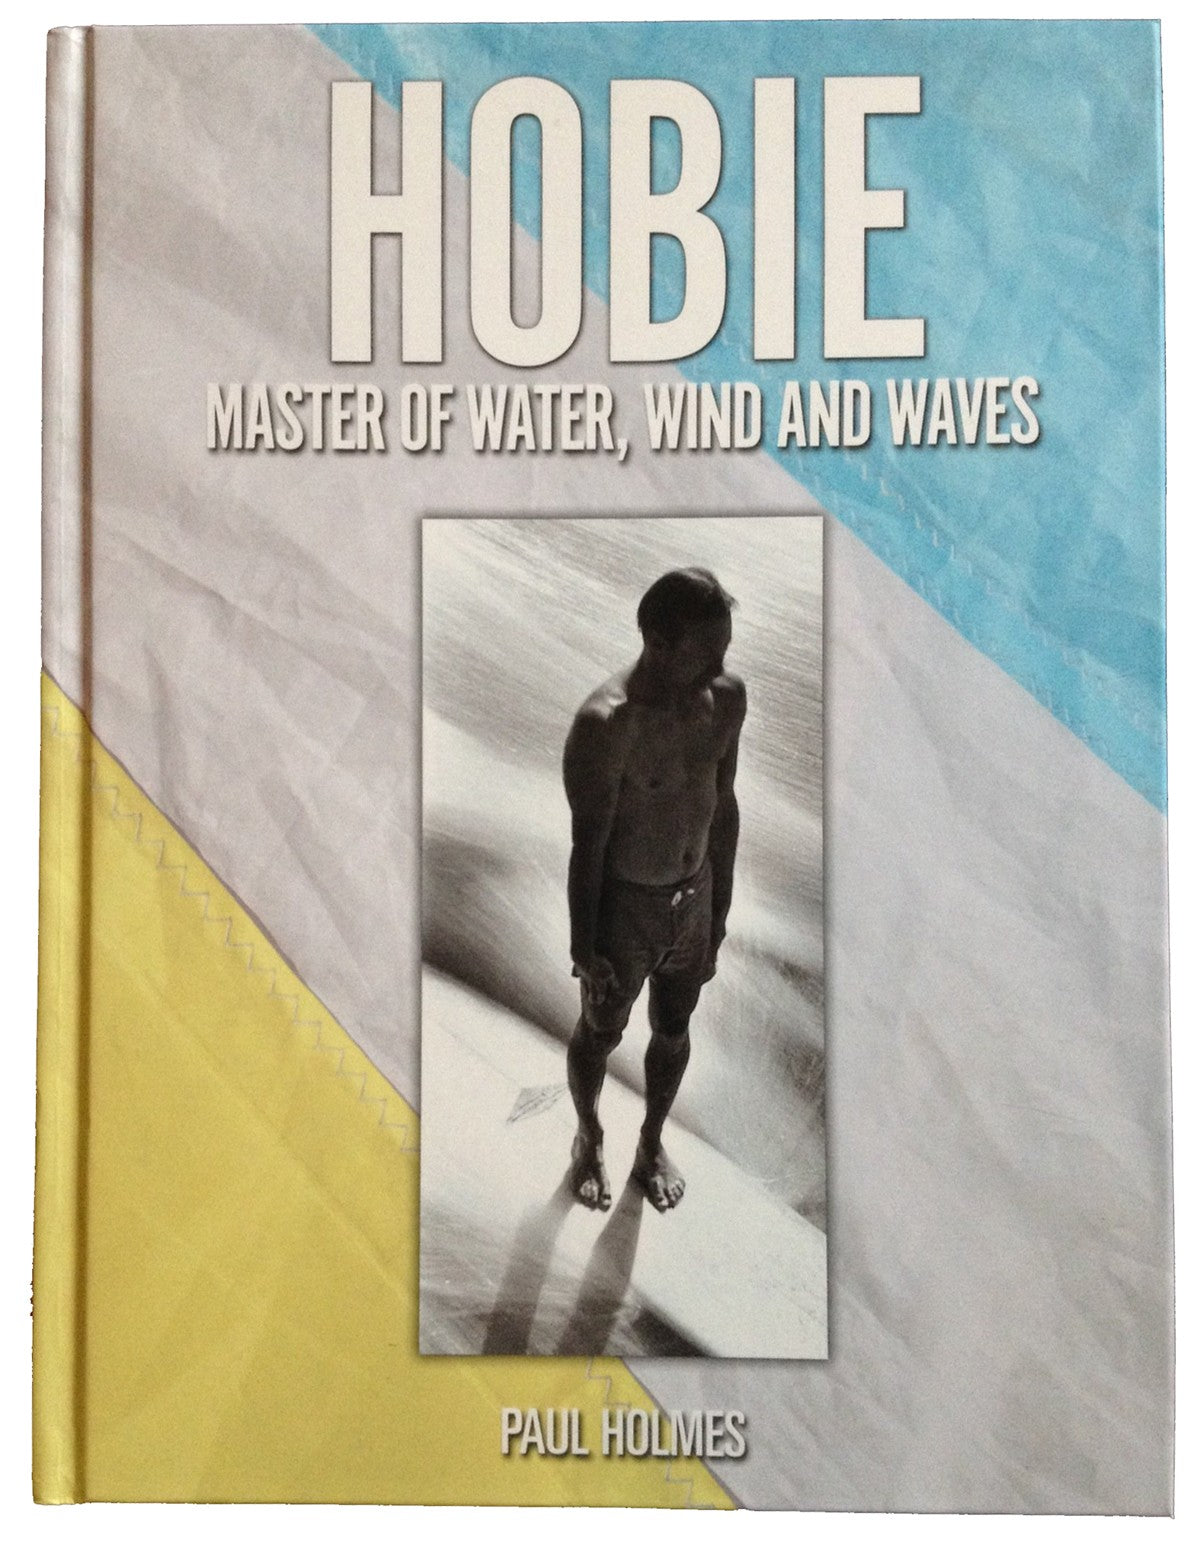 Hobie Master of Water, Wind And Waves - Libro de surf (por Paul Holmes)